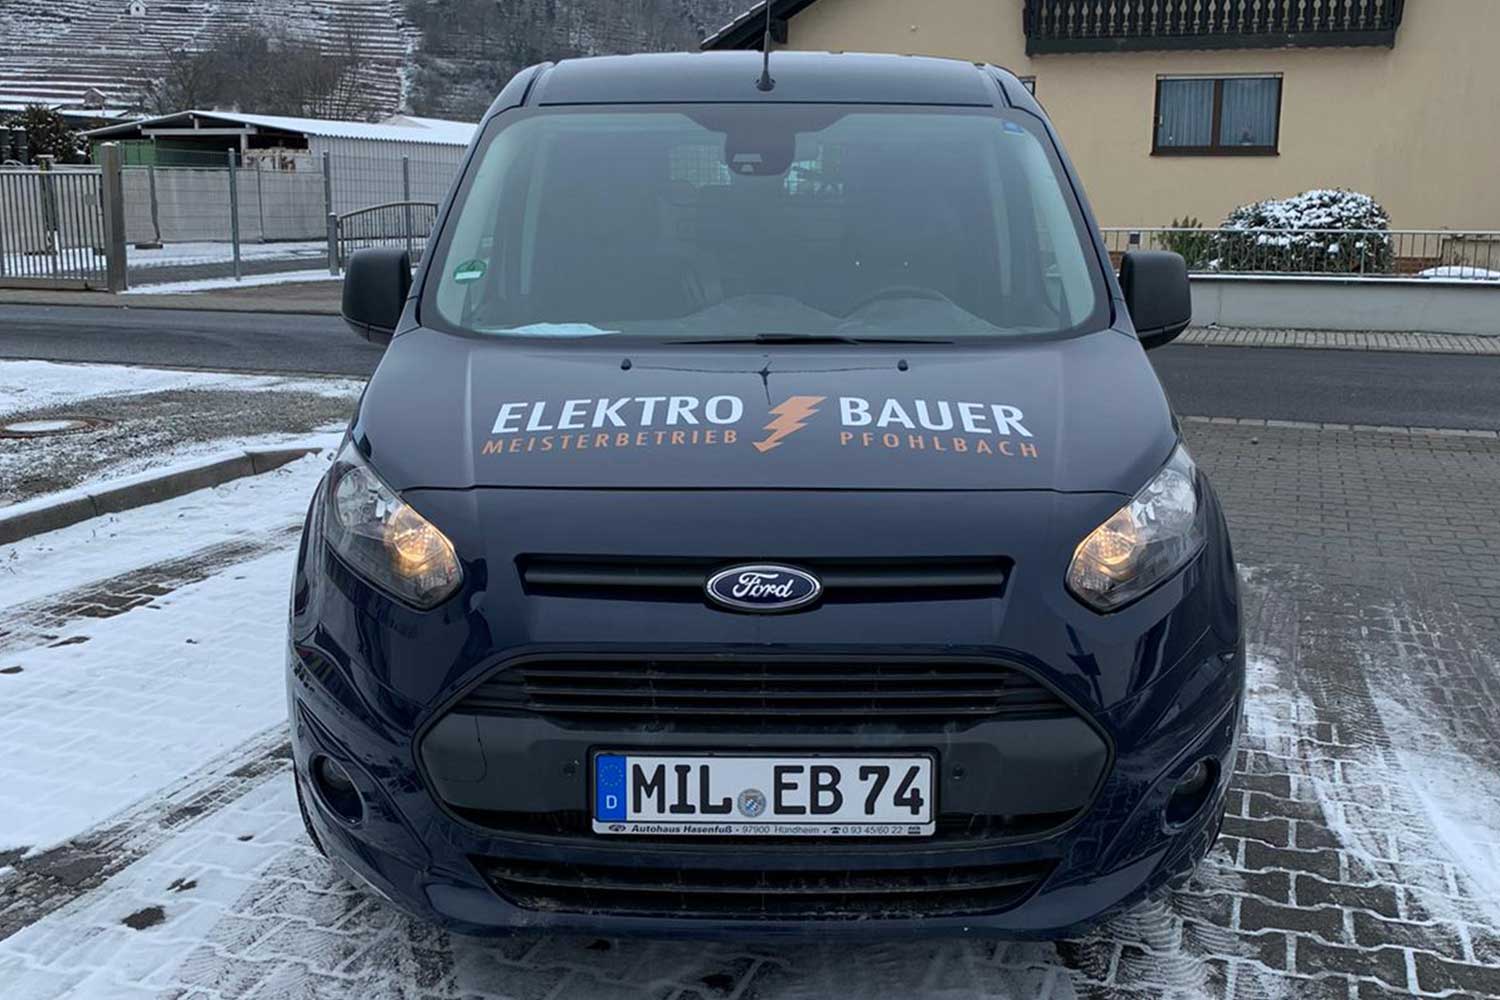 Elektro Bauer Ford vorne